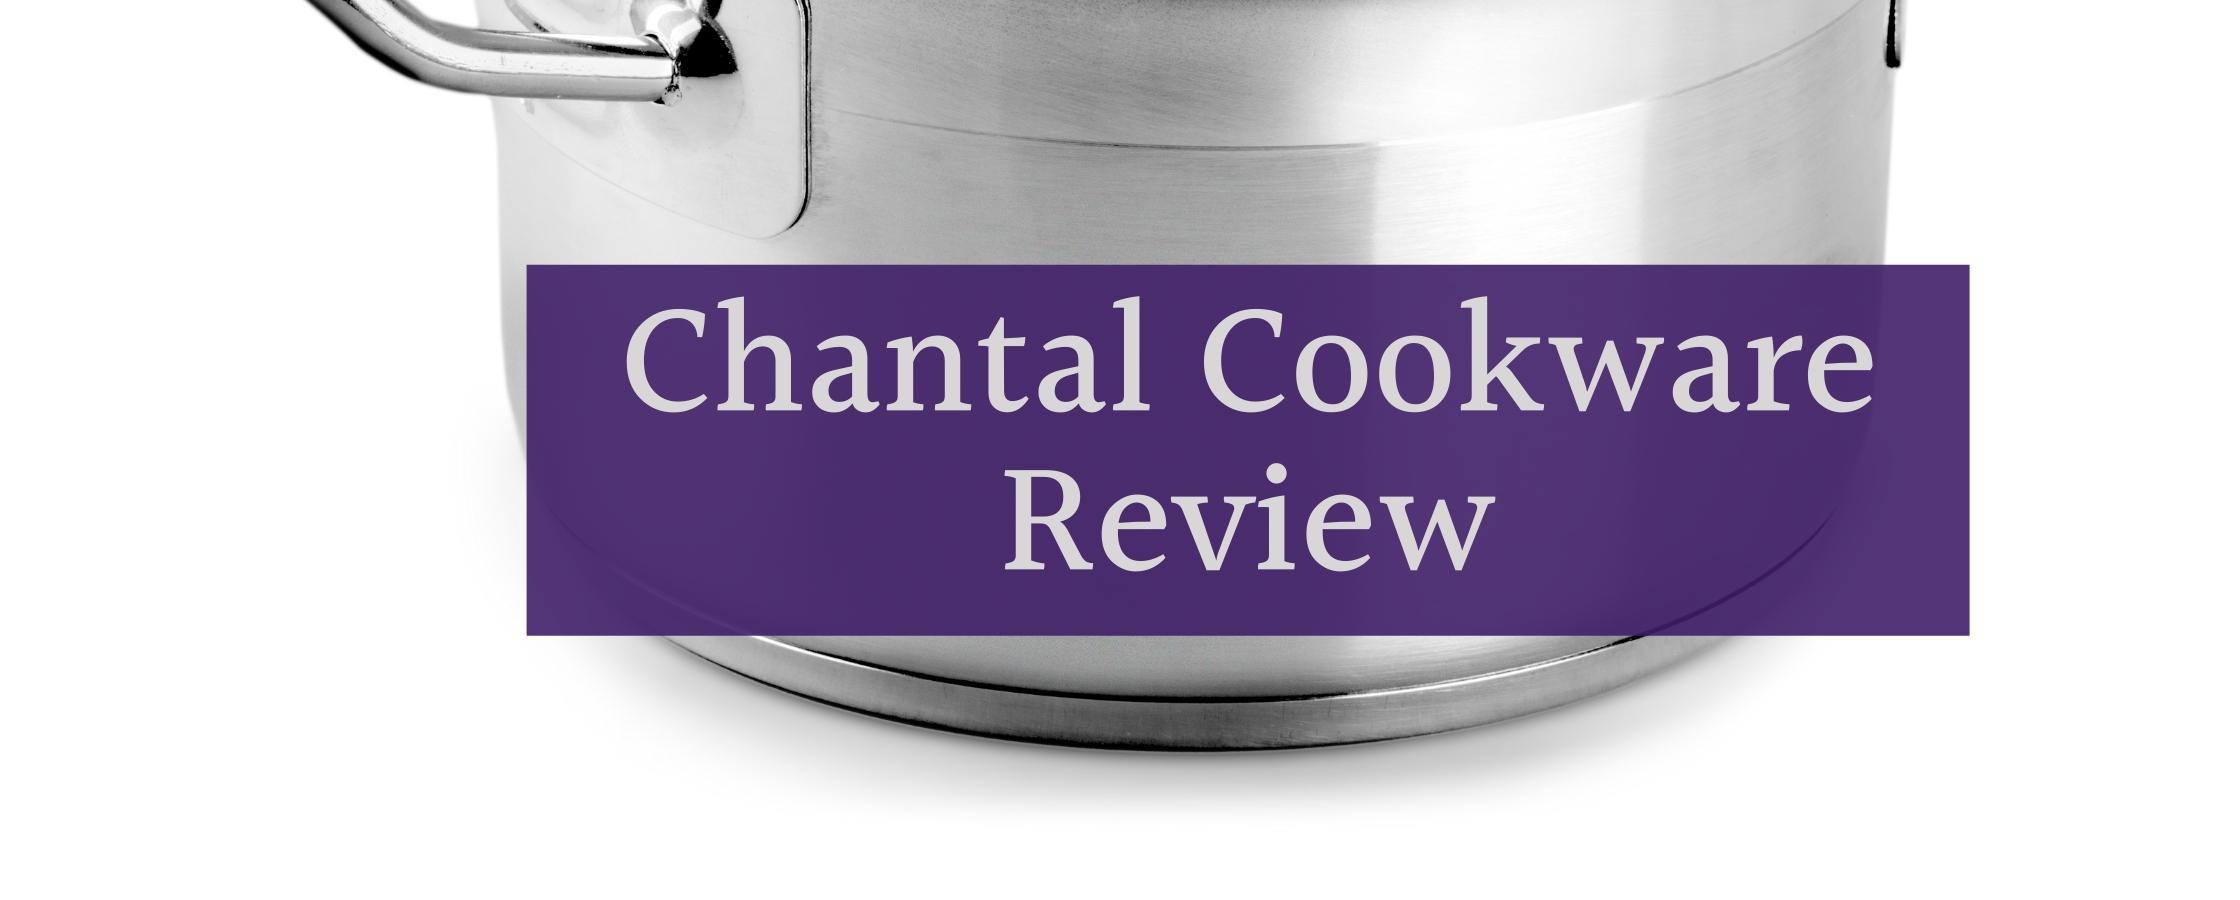 https://clankitchen.com/wp-content/uploads/2022/04/chantal-cookware-review.jpg